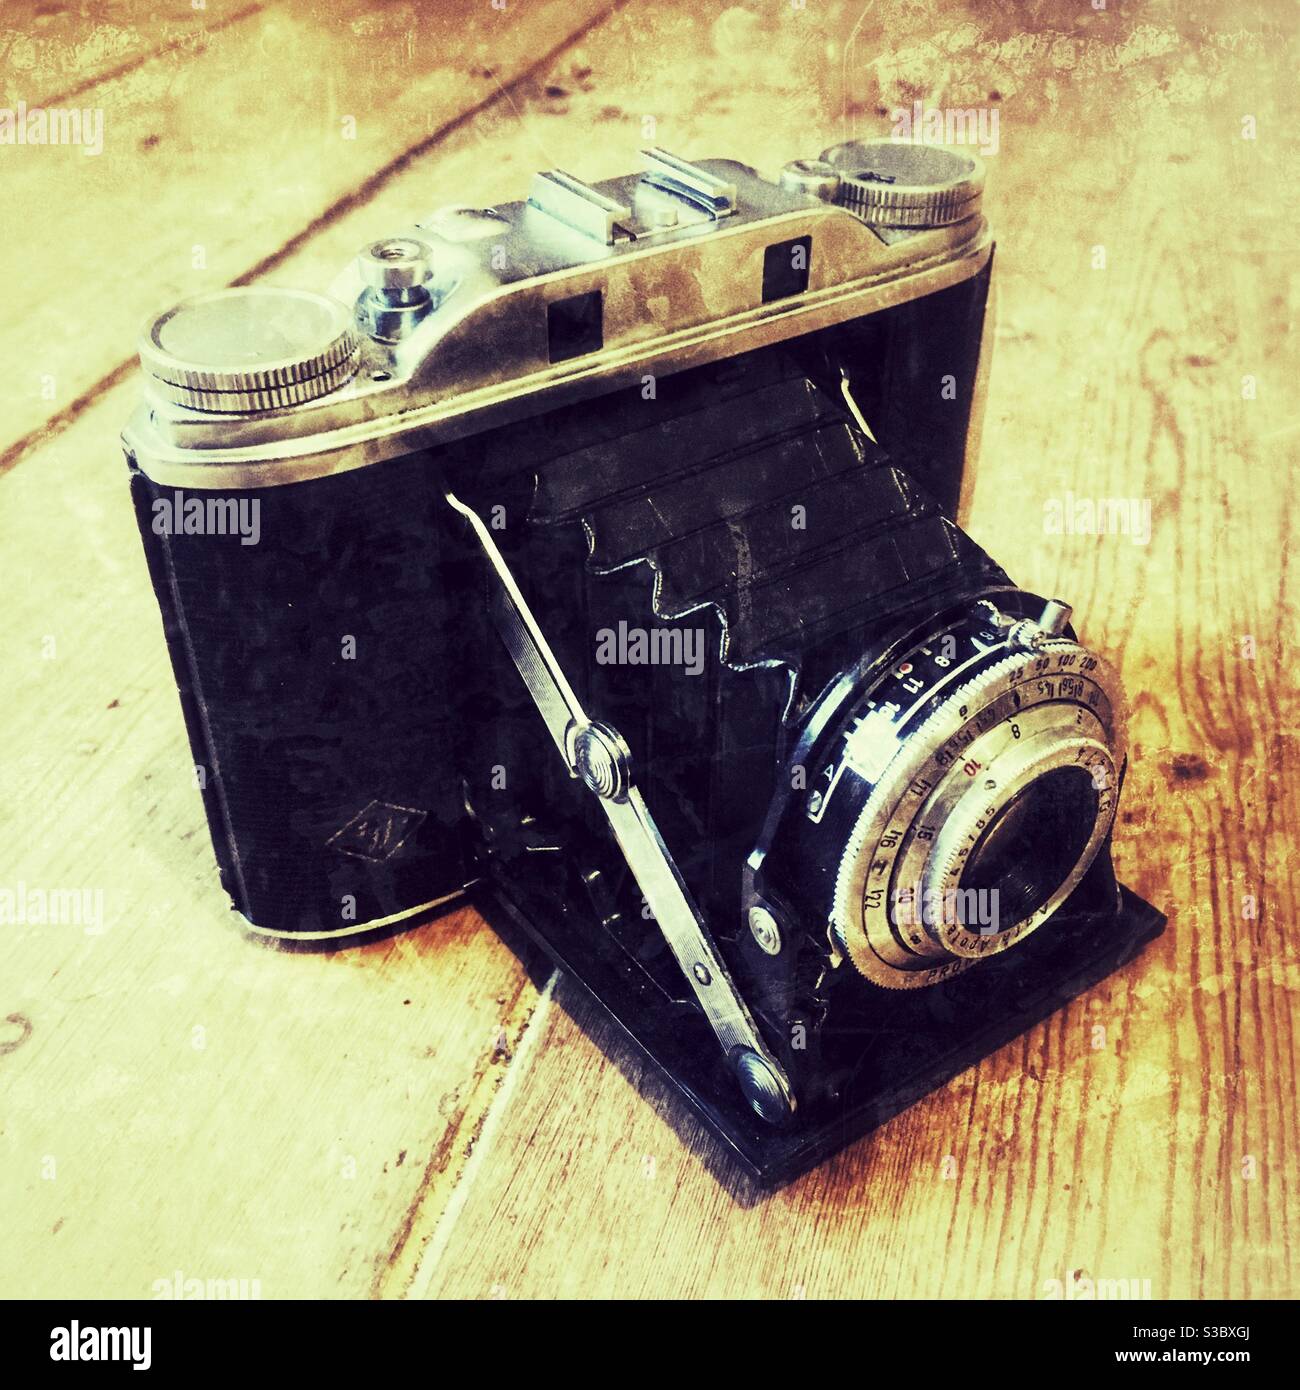 Agfa isolette III analogue 120 film camera. Stock Photo